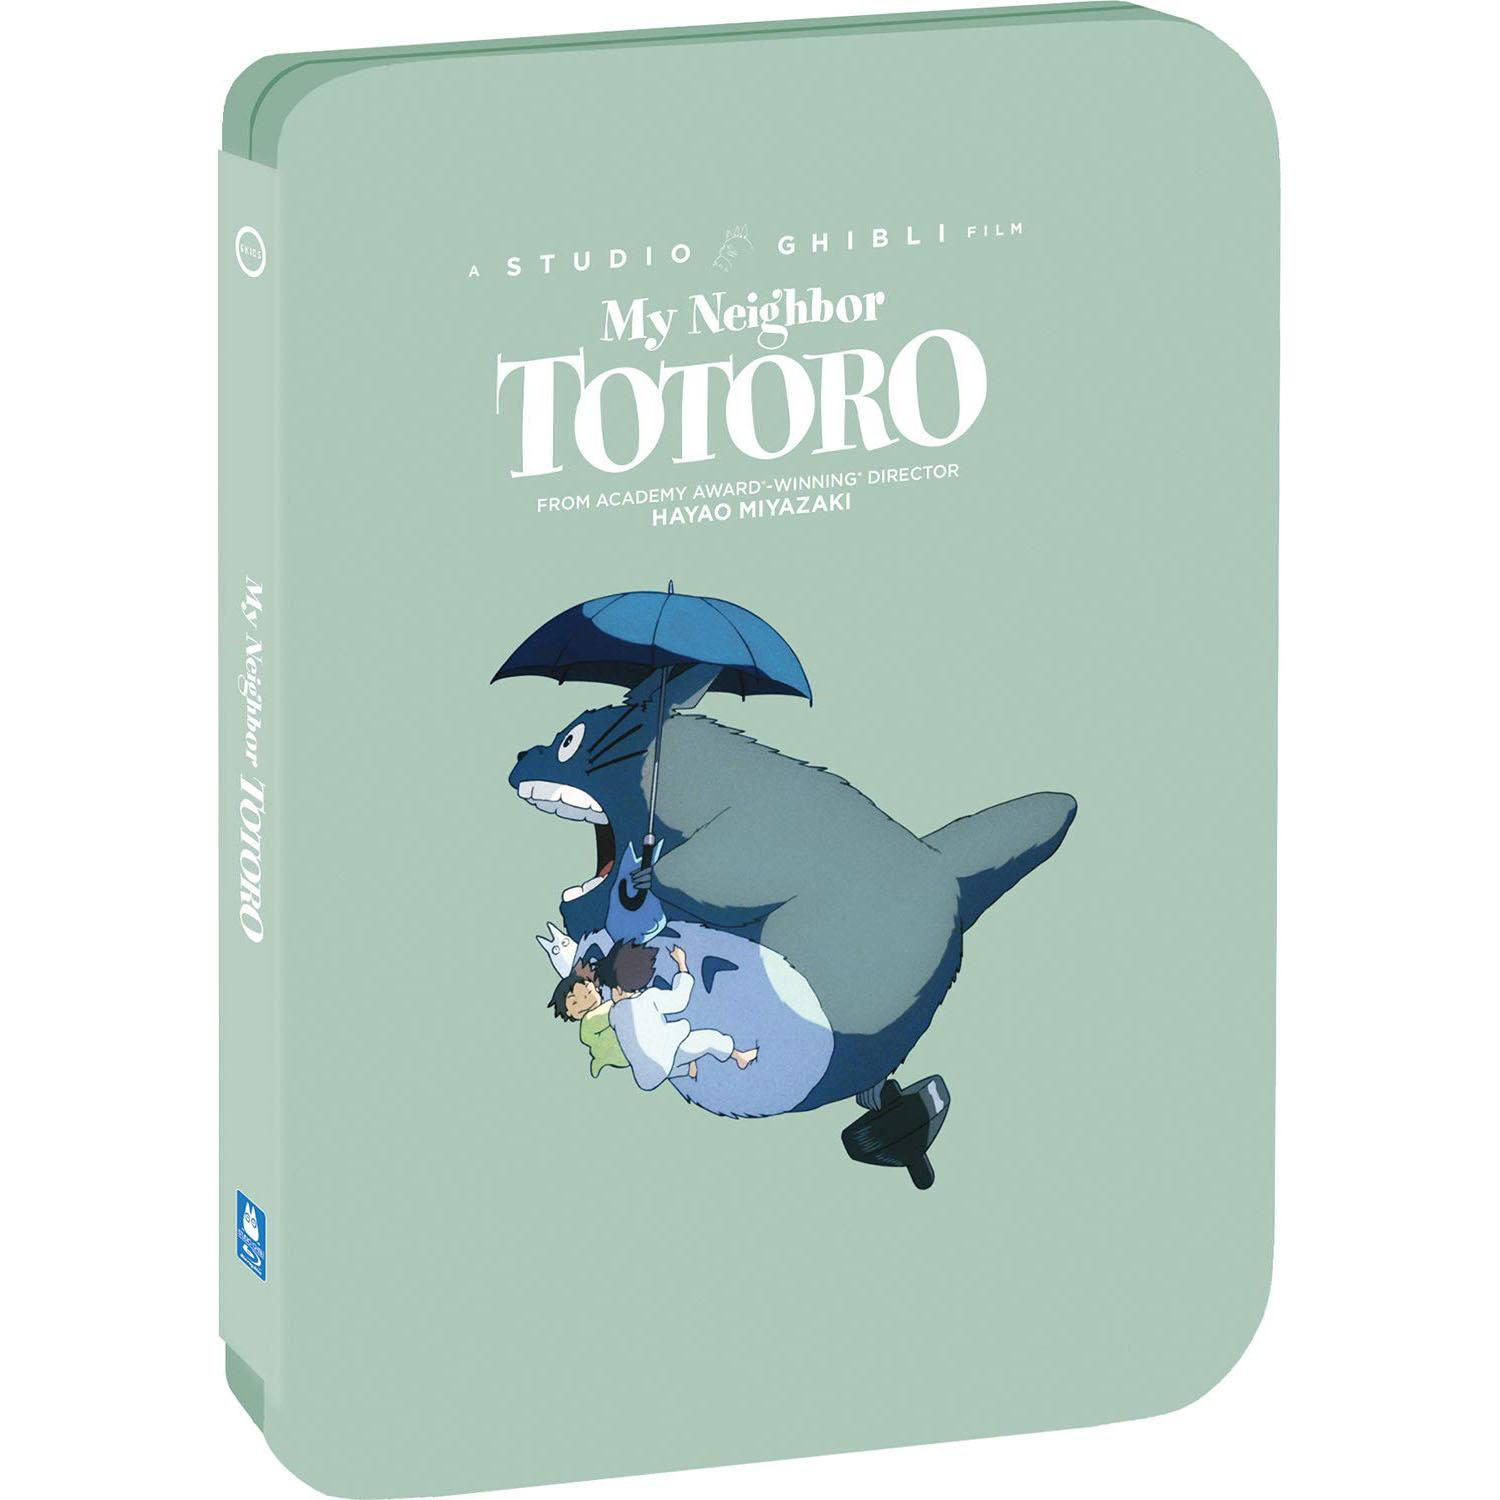 Studio Ghibli Limited Edition Blu-ray + DVD Steelbooks for $16.19